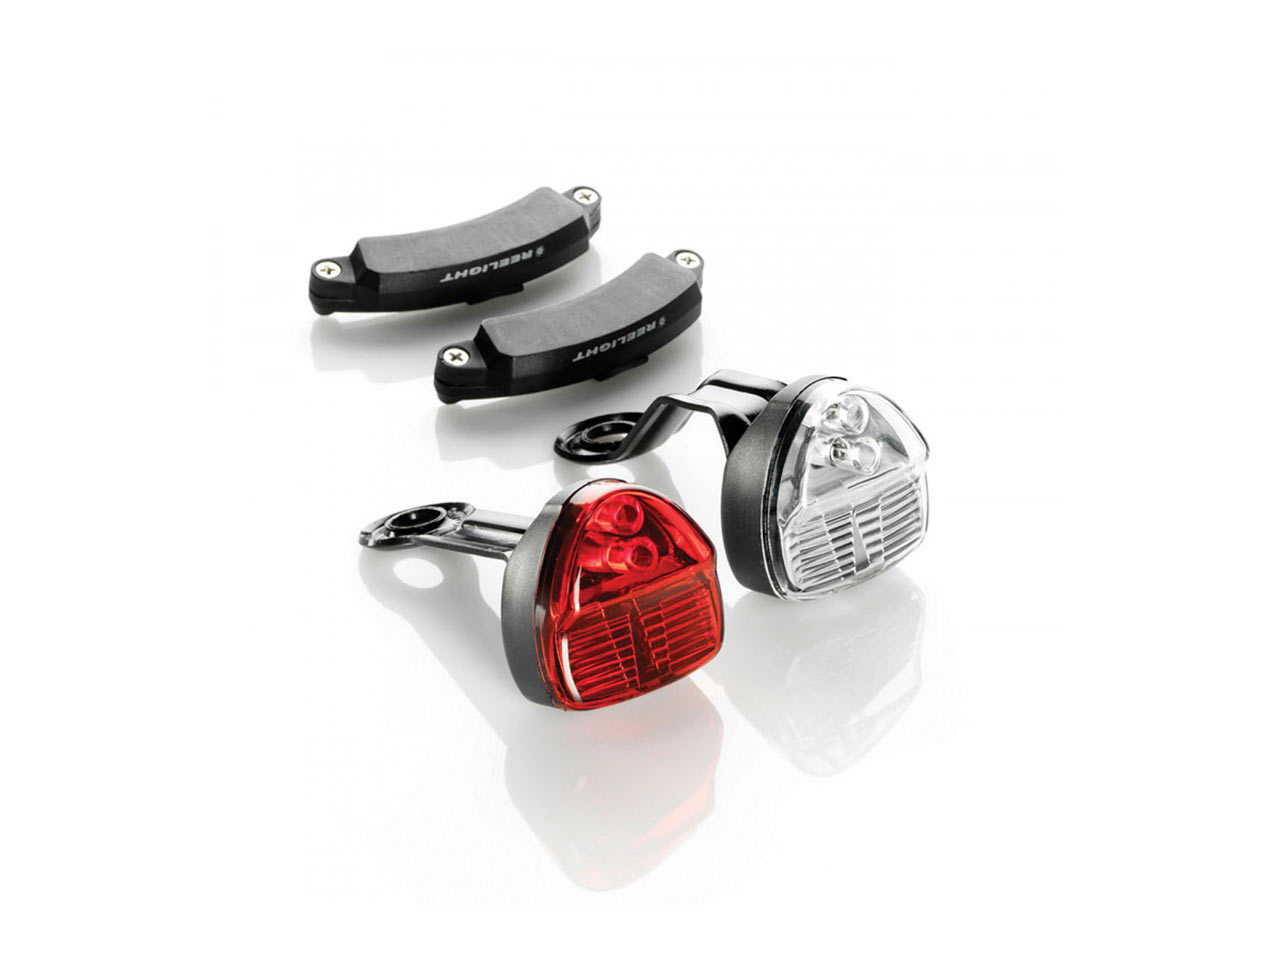 Reelight SL100 Flash Compact Front & Rear Magnet Lights